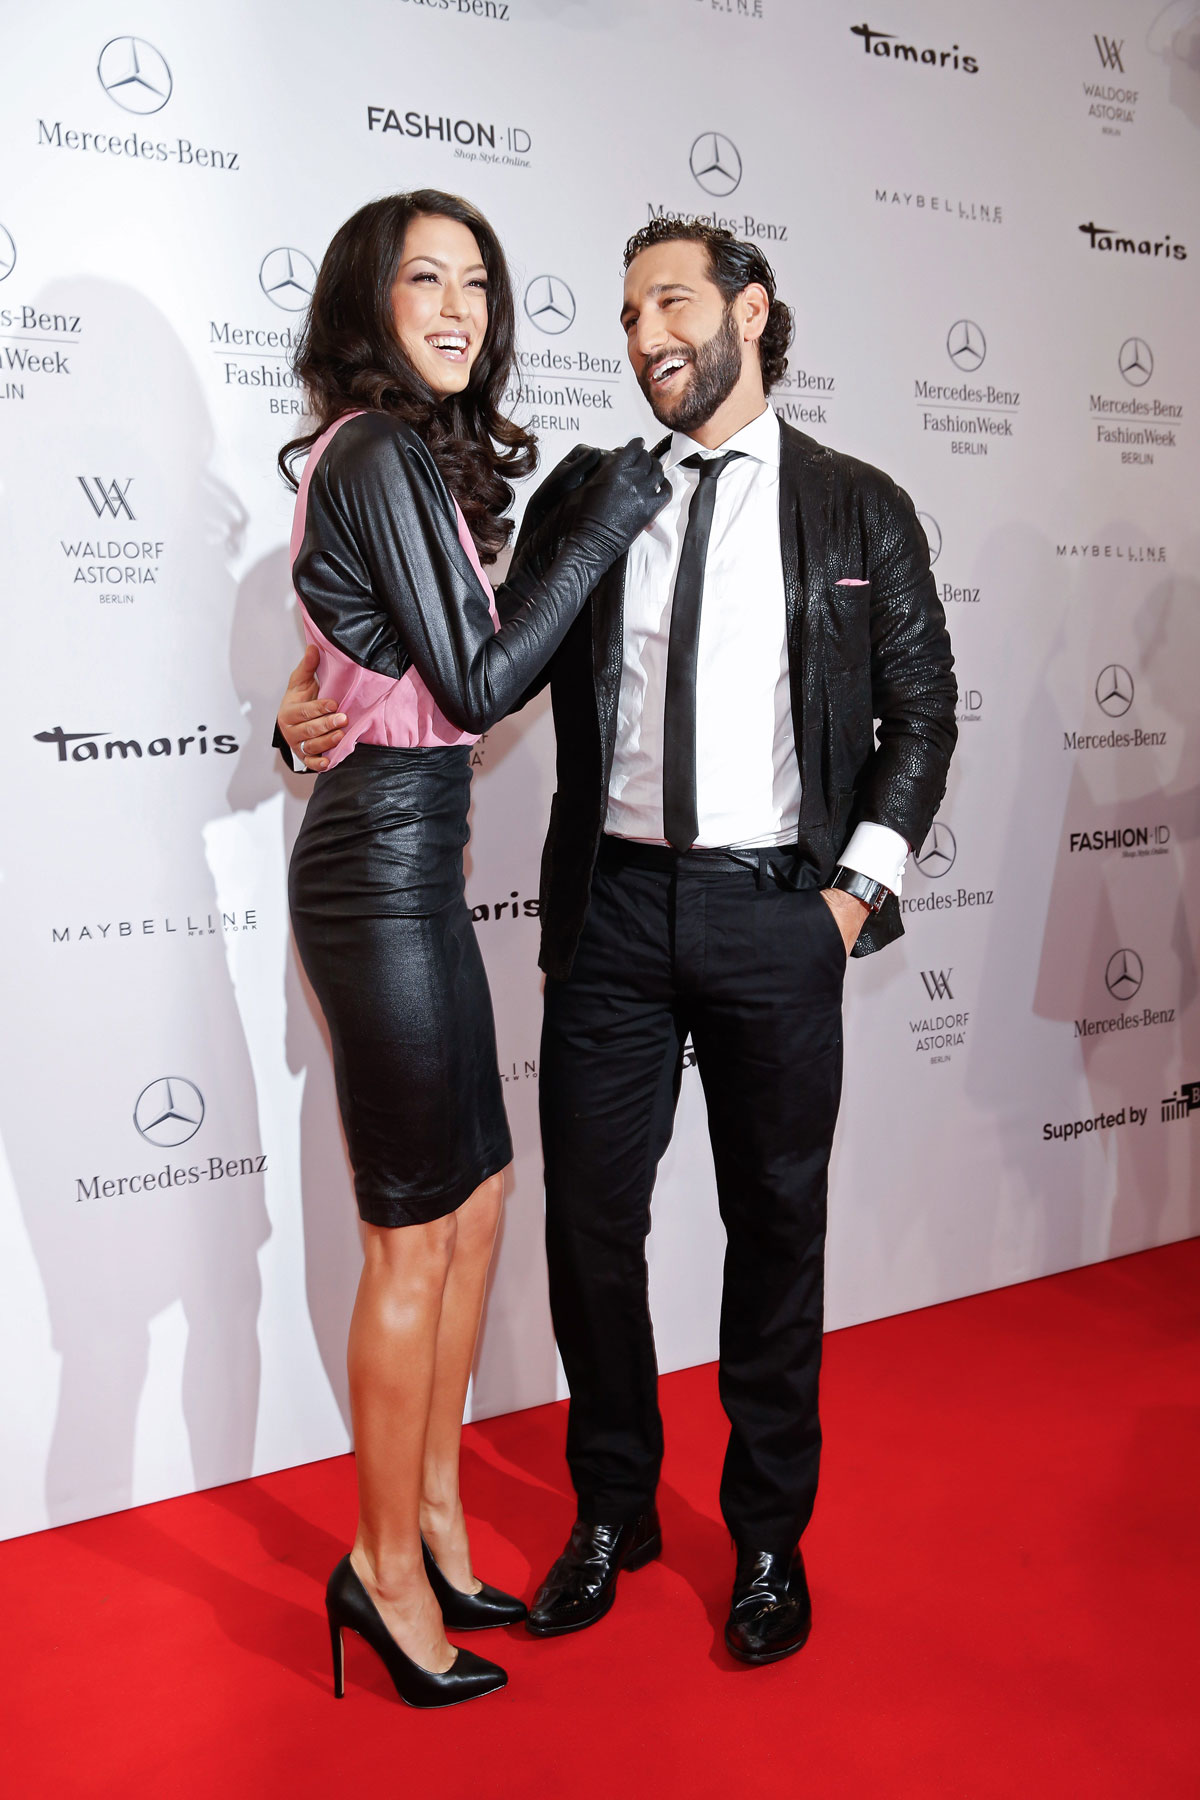 Rebecca Mir attends Mercedes-Benz Fashion Week